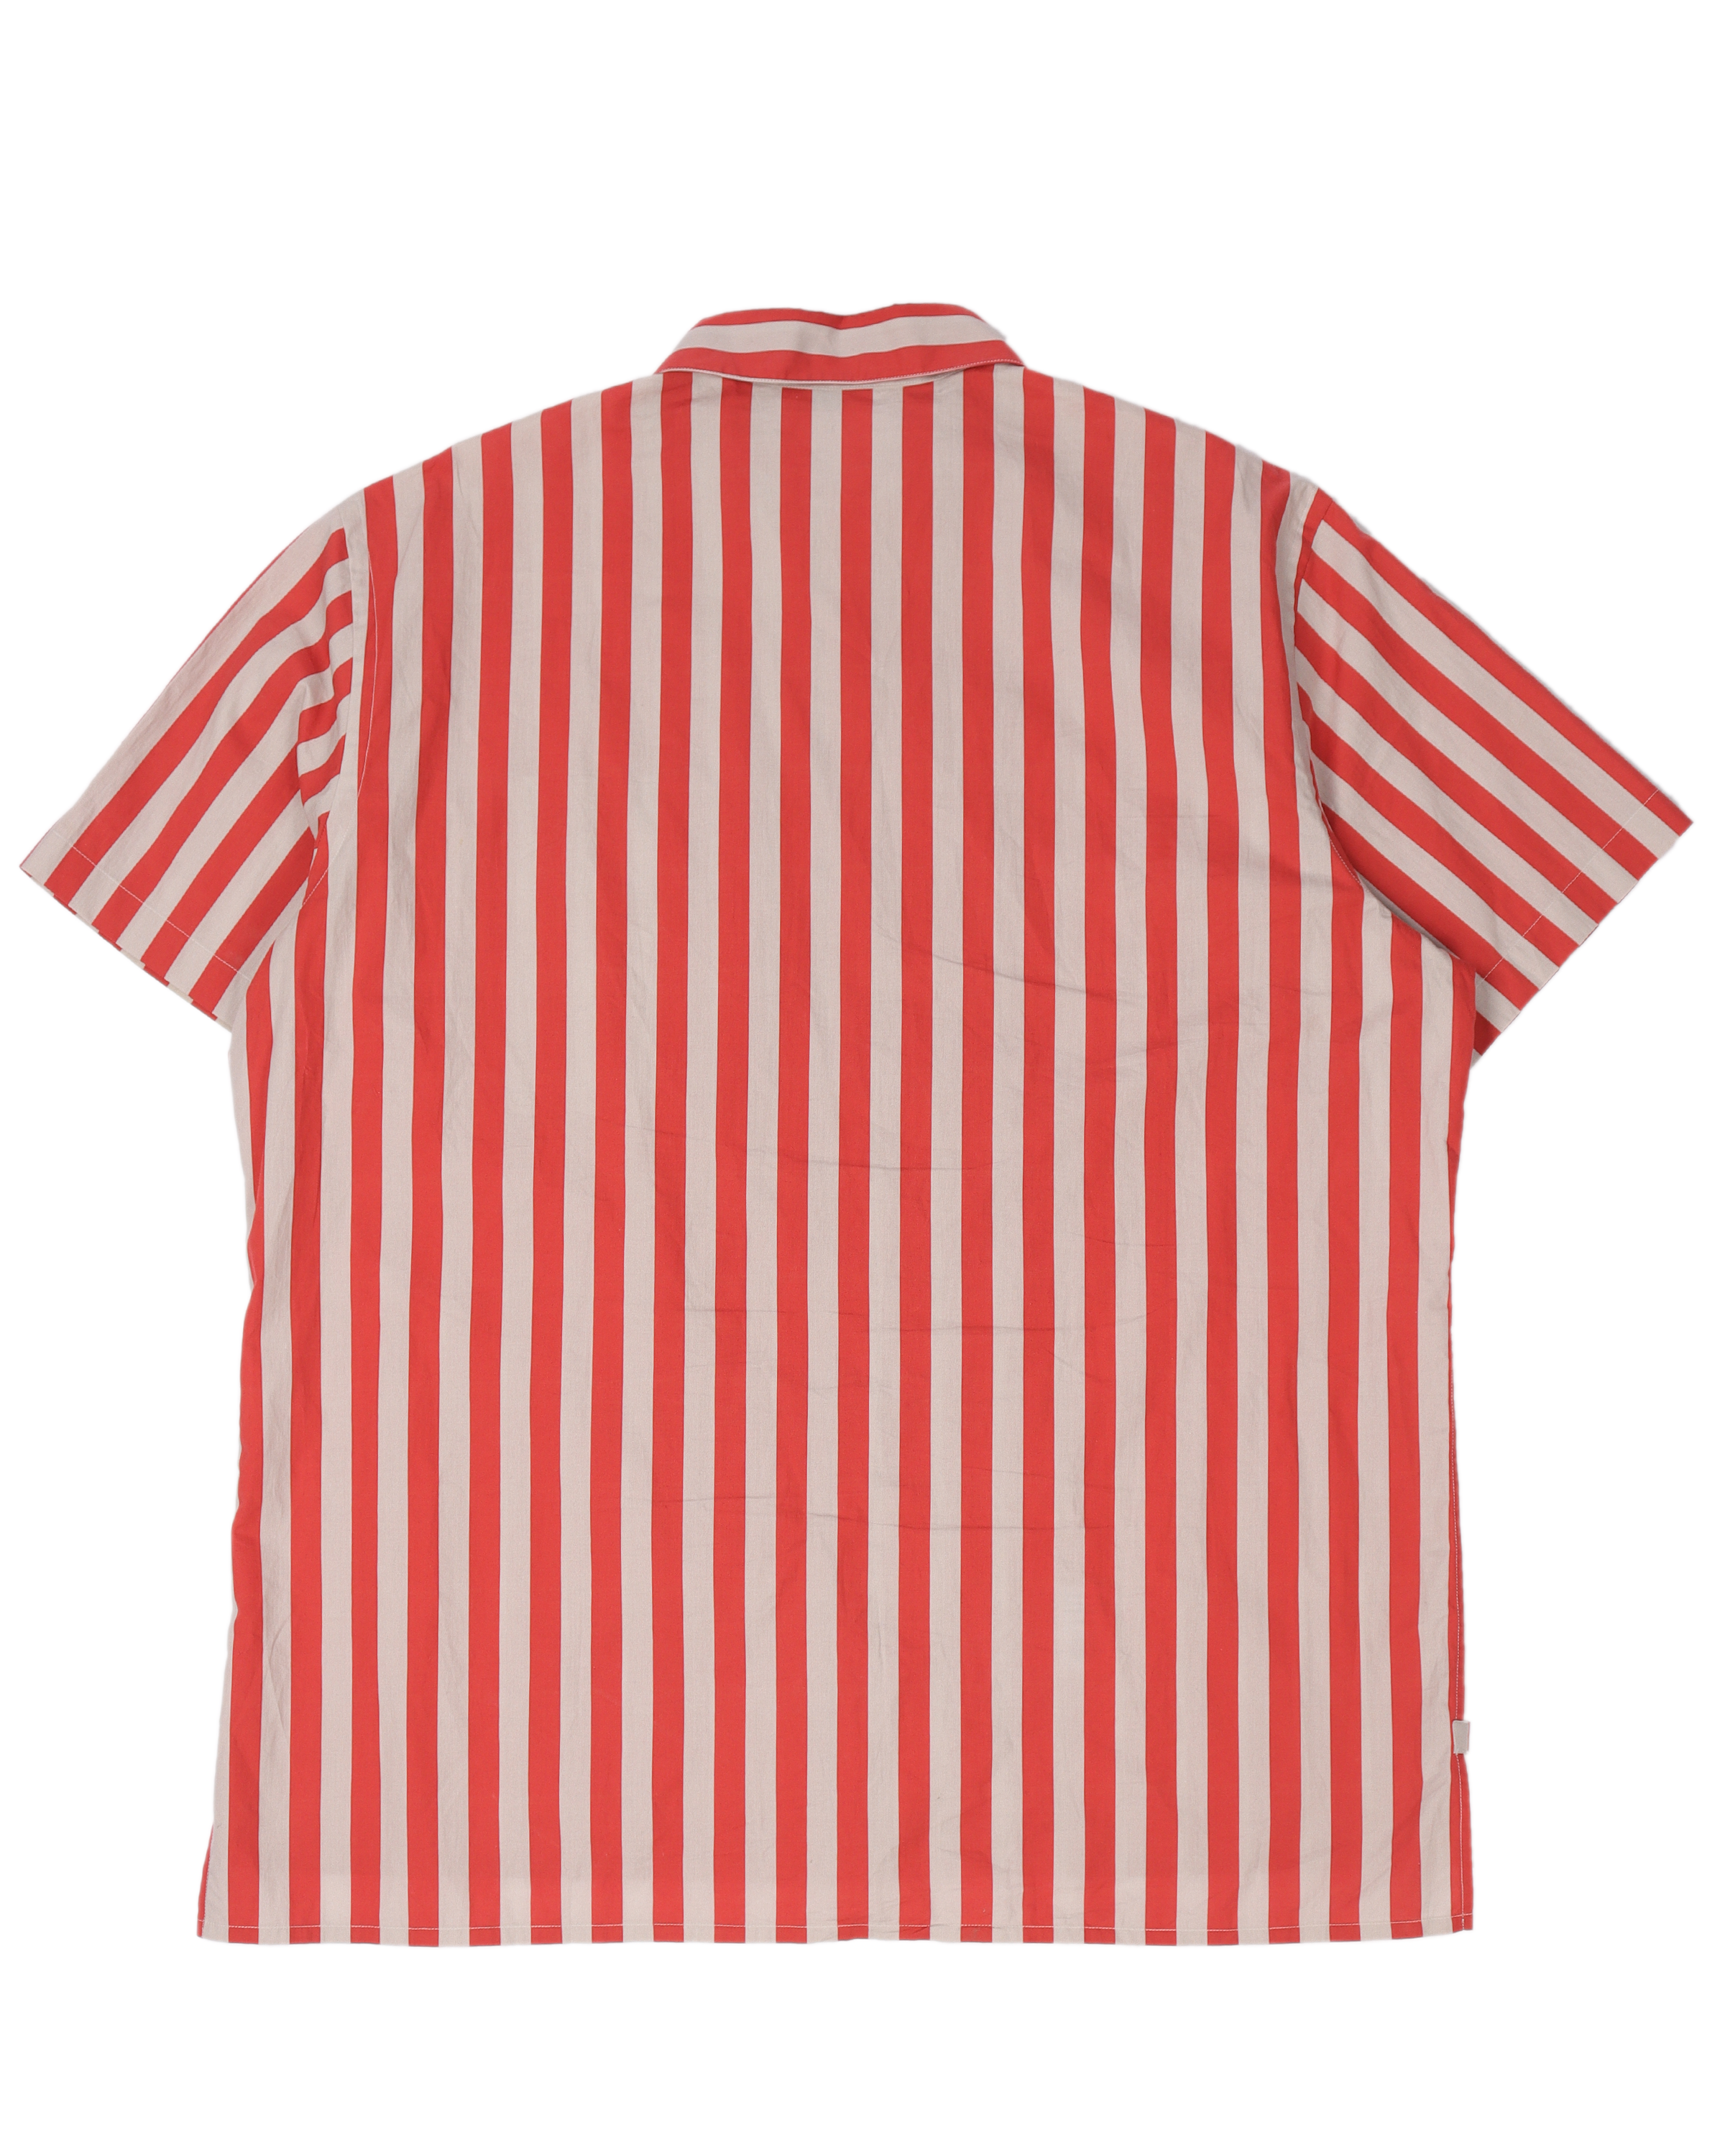 Striped Vacation Shirt